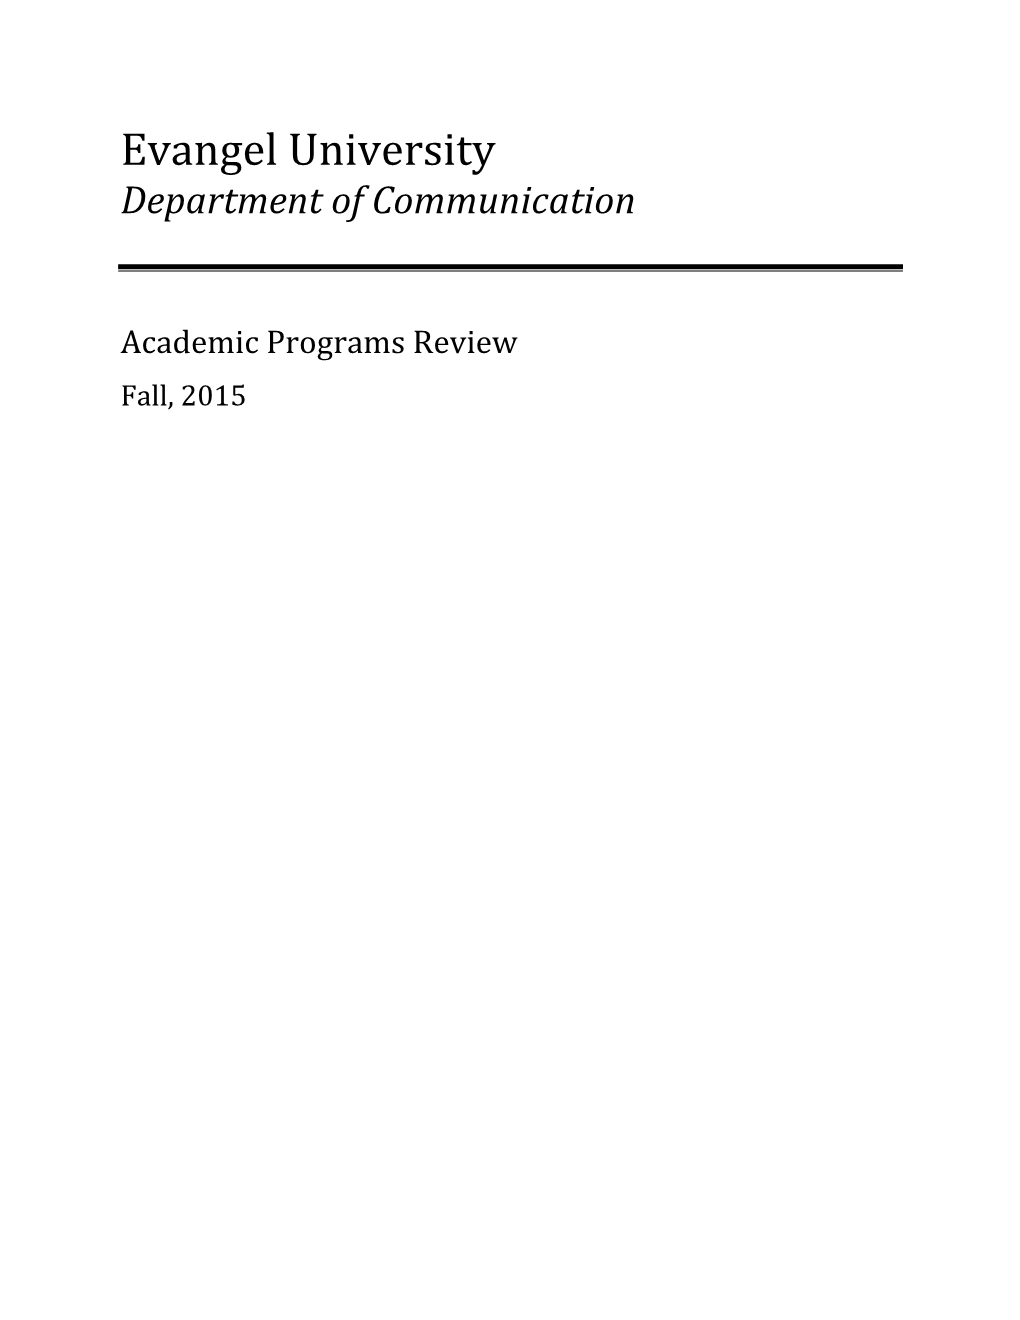 Communication Program Review